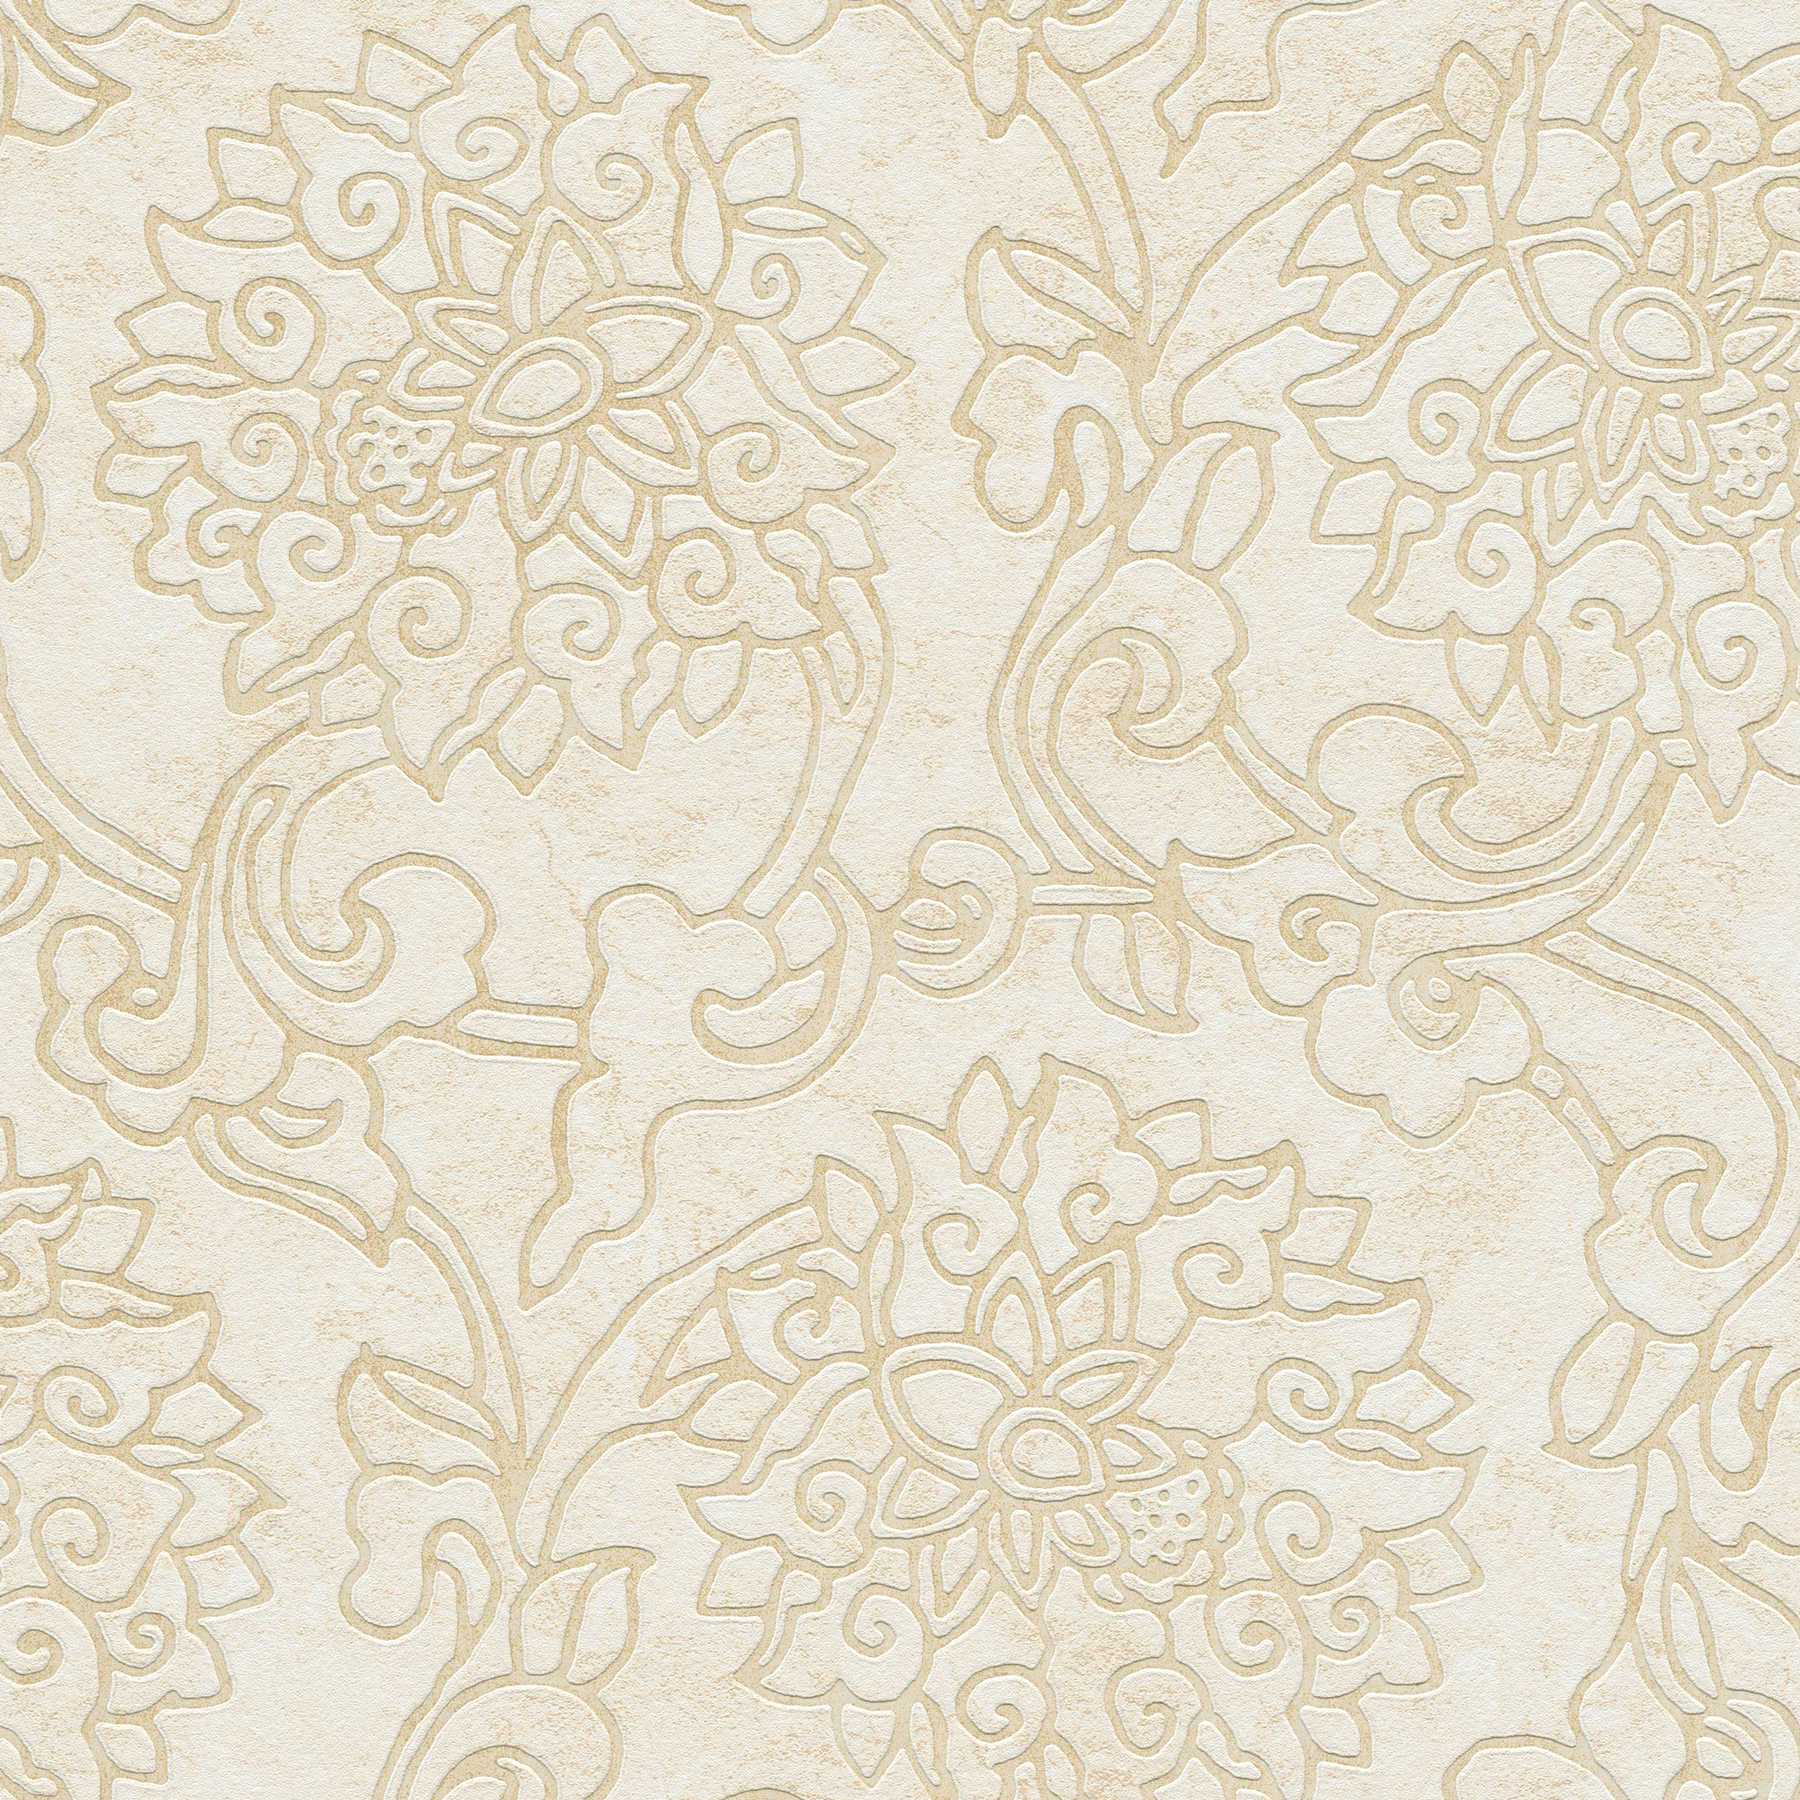         Florale Ornamenttapete im Asian Style mit Goldakzenten – Beige, Gold, Creme
    